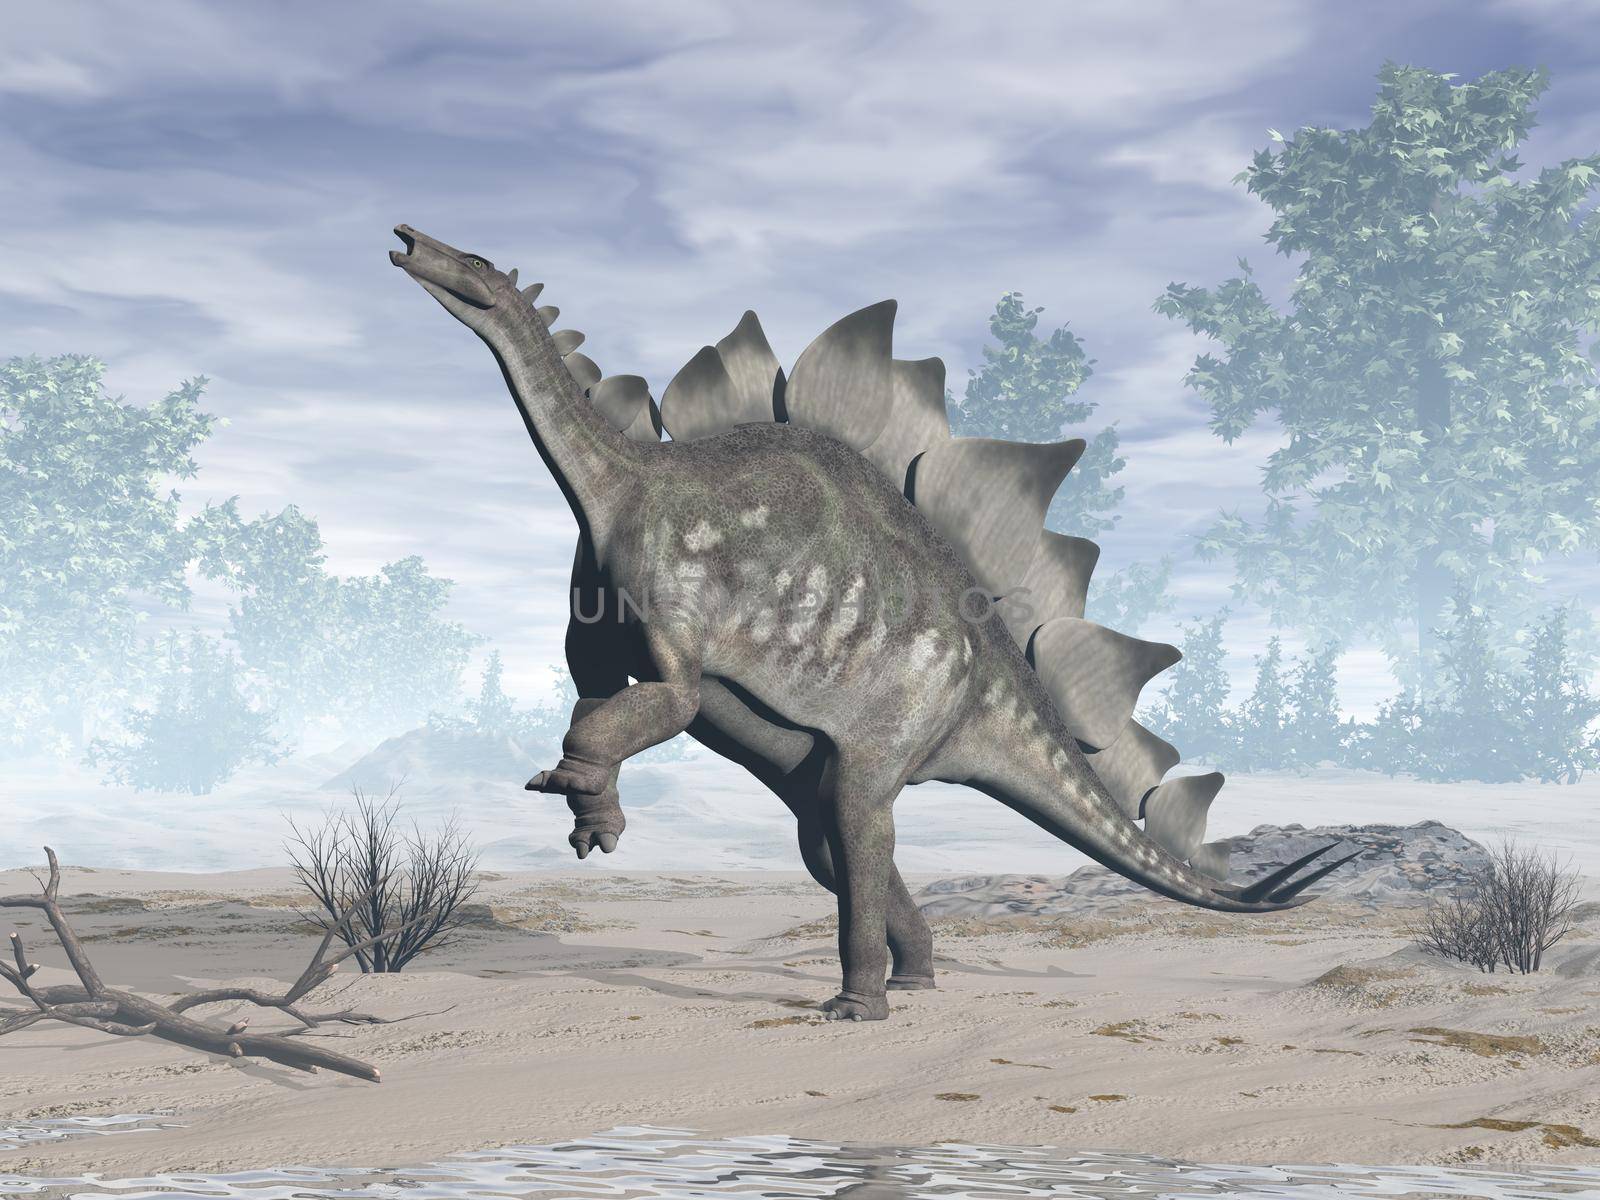 Stegosaurus dinosaur rearing up in the desert by day - 3D render